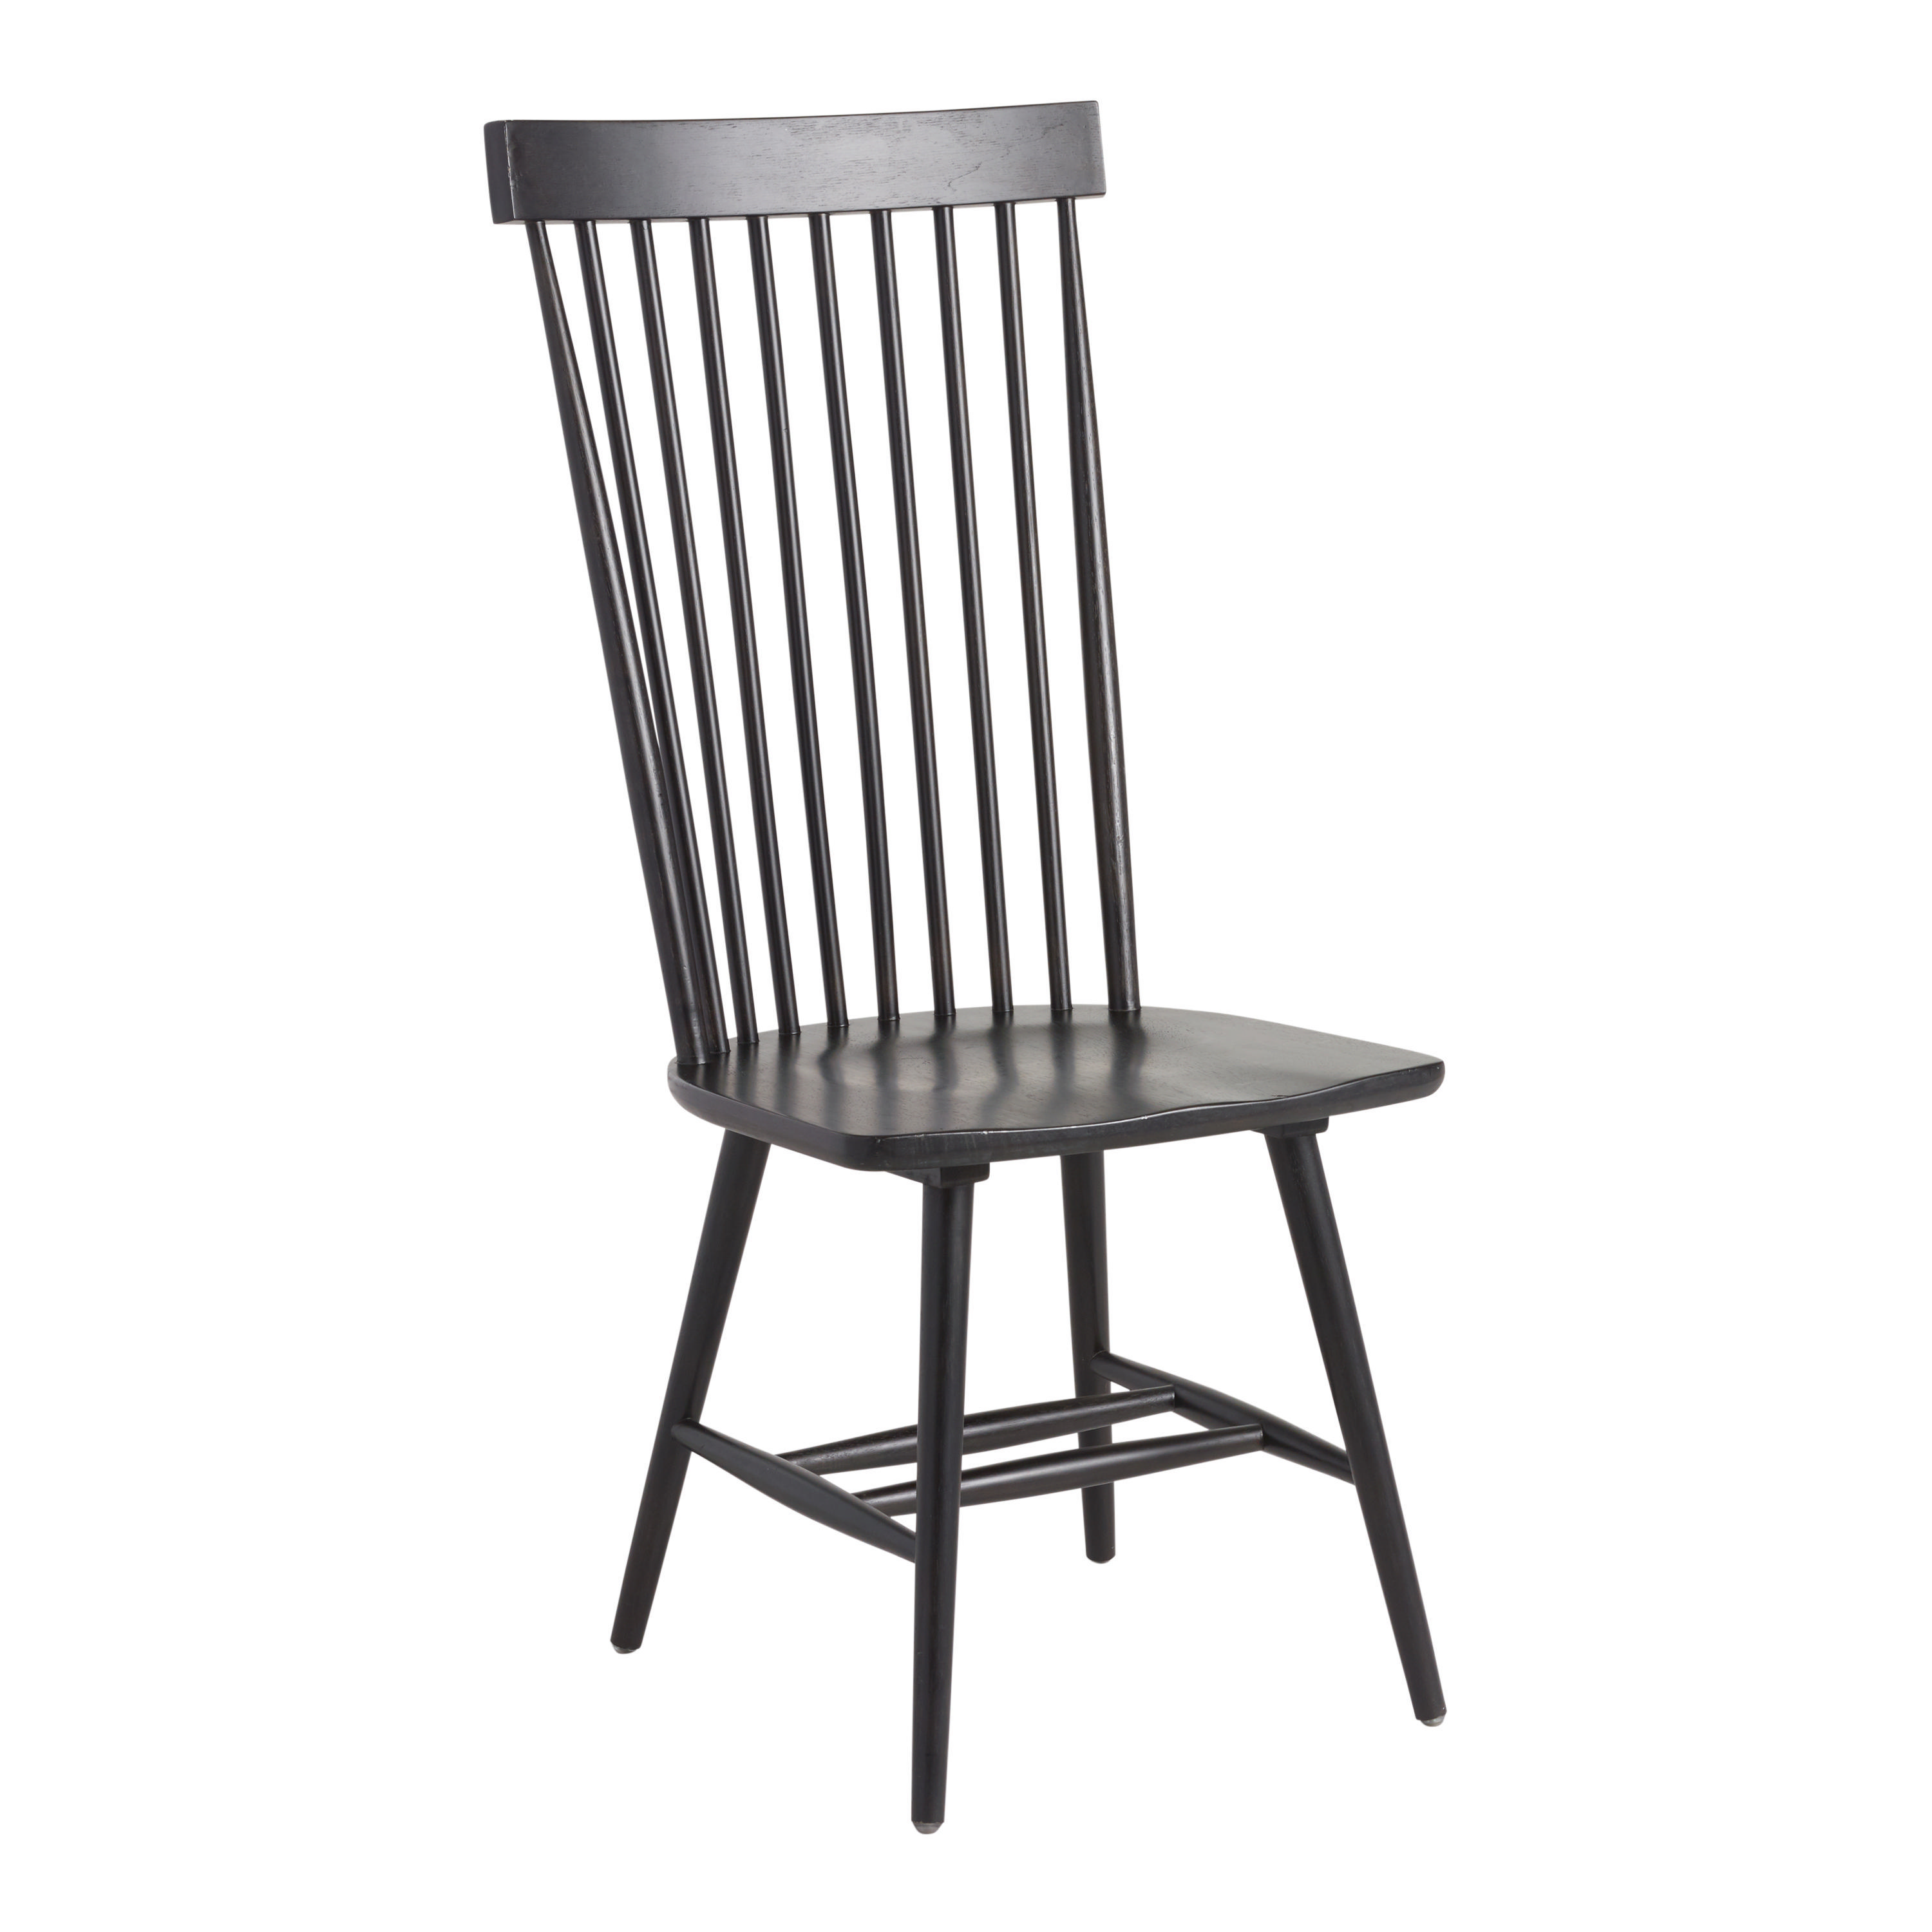 Kamron Black Wood Windsor Style Dining Chair Set of 2 - World Market